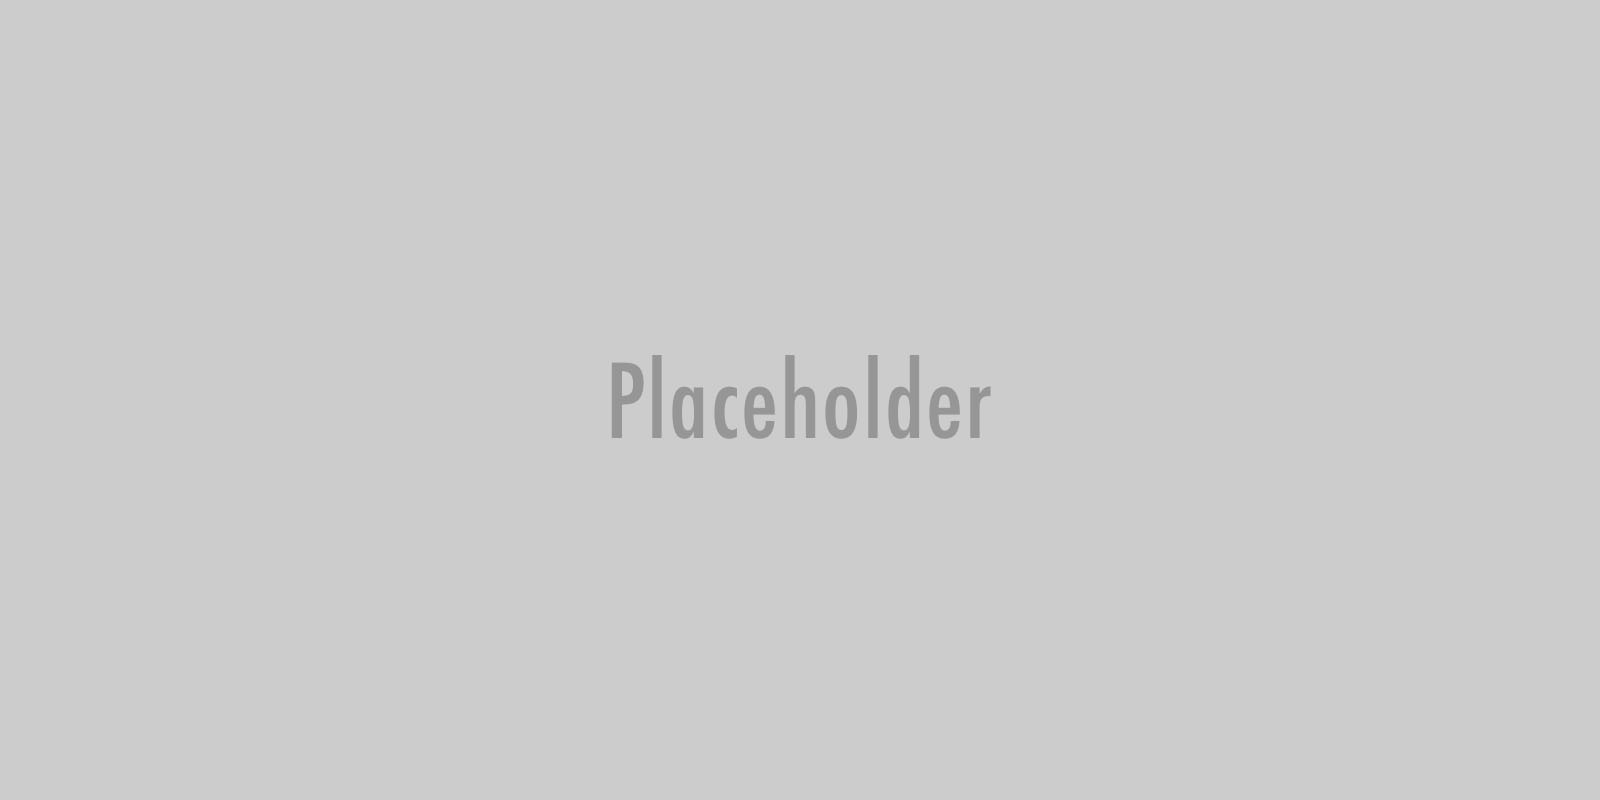 placeholder 5